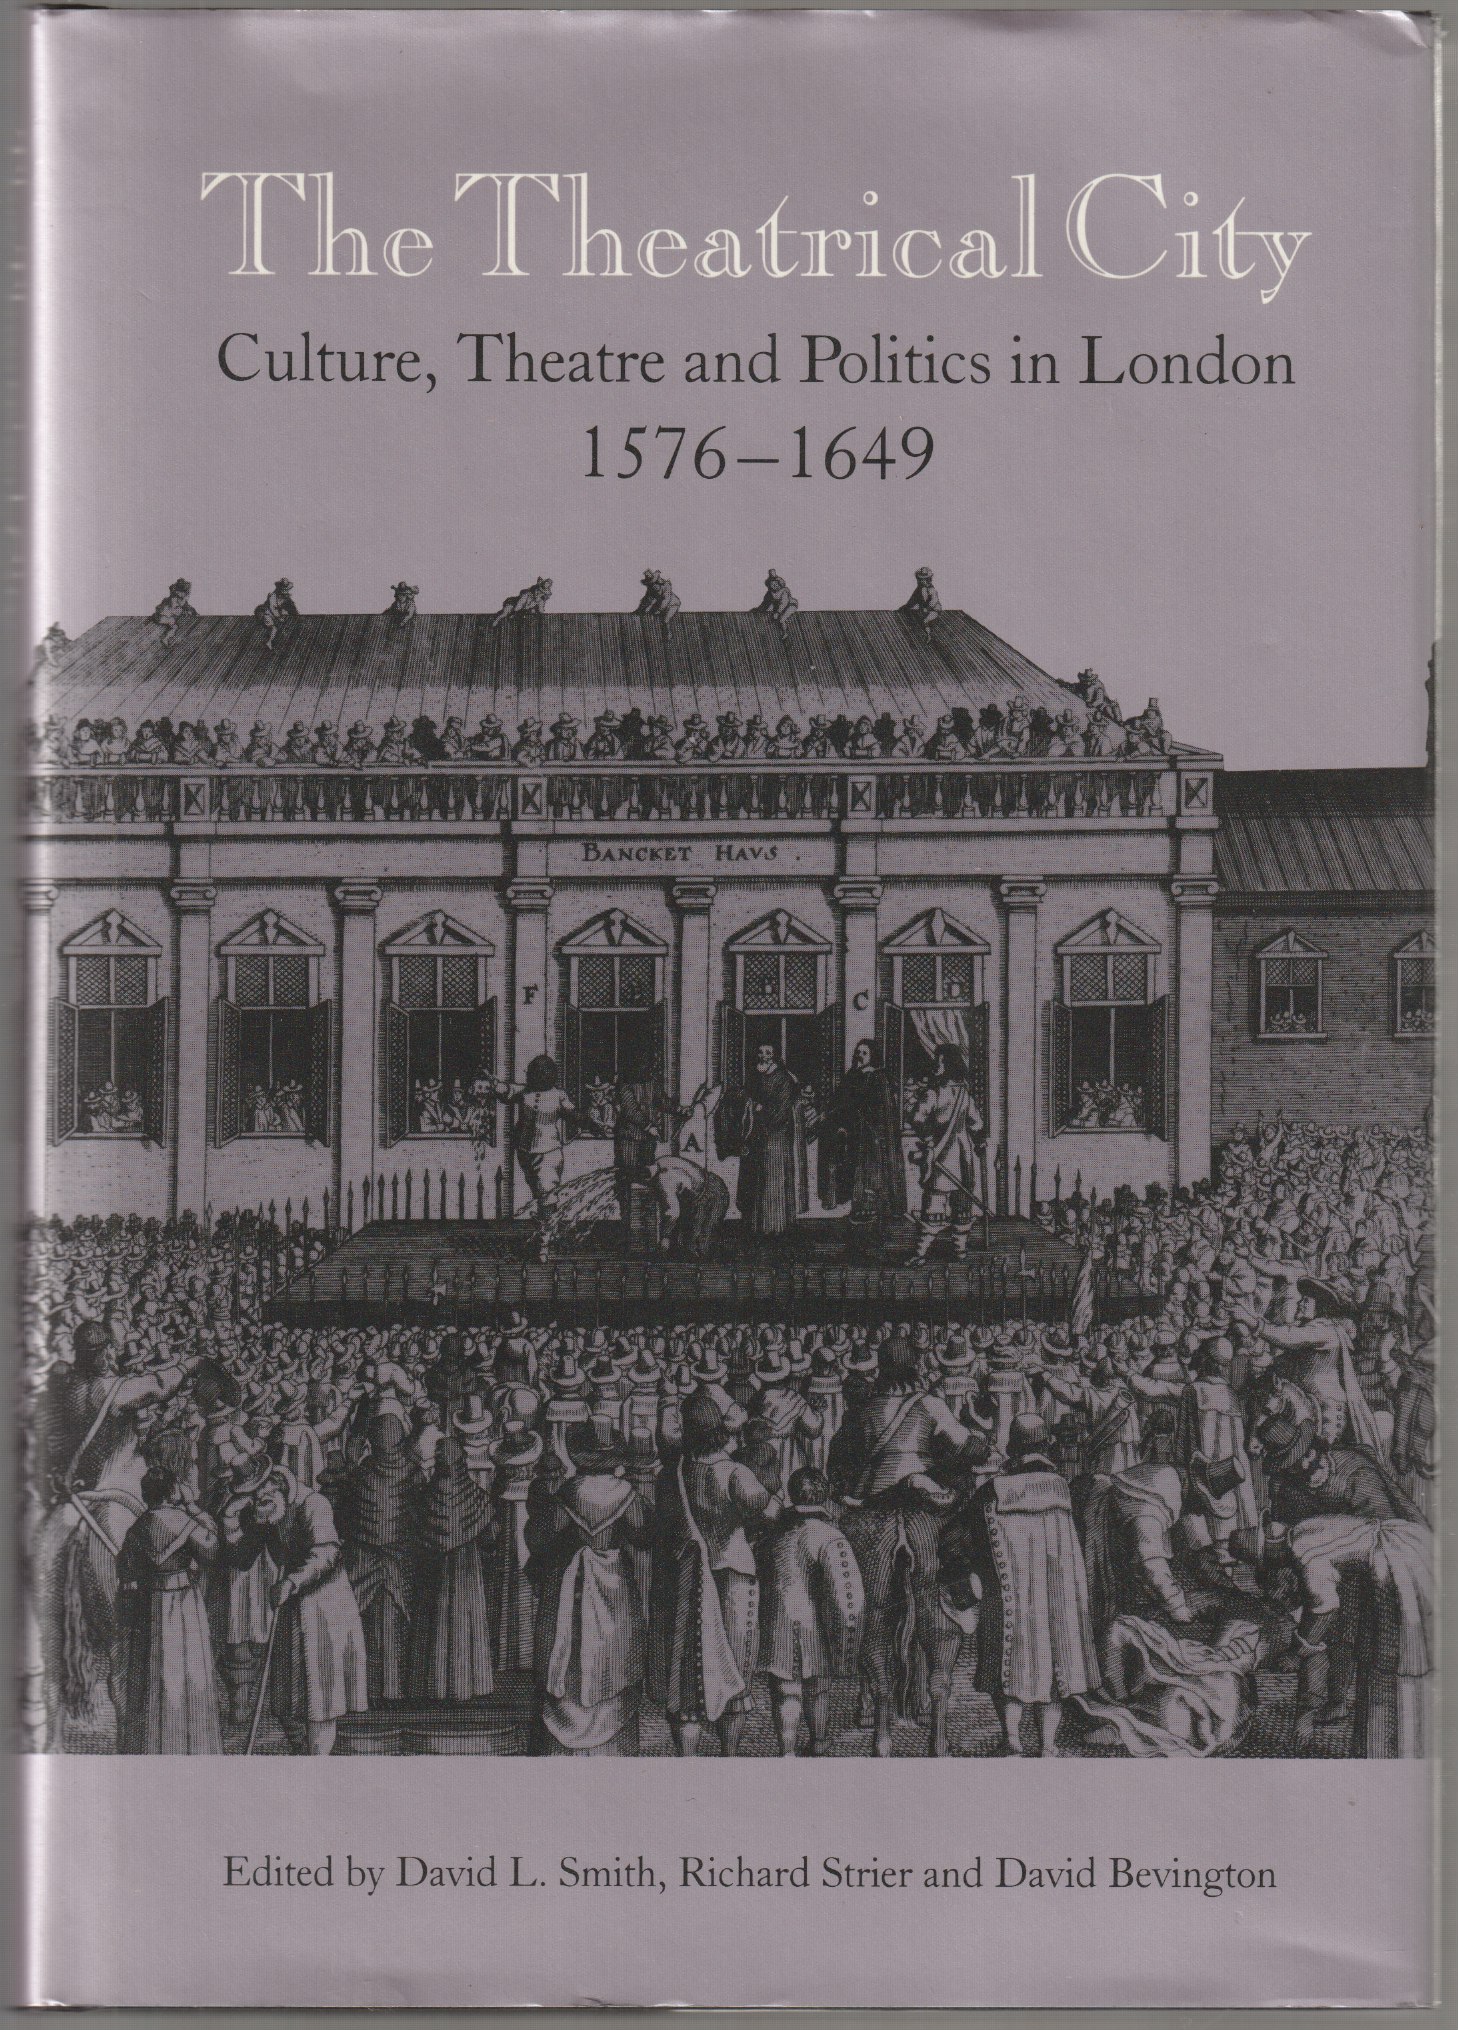 The theatrical city : culture, theatre and politics in London, 1576-1649